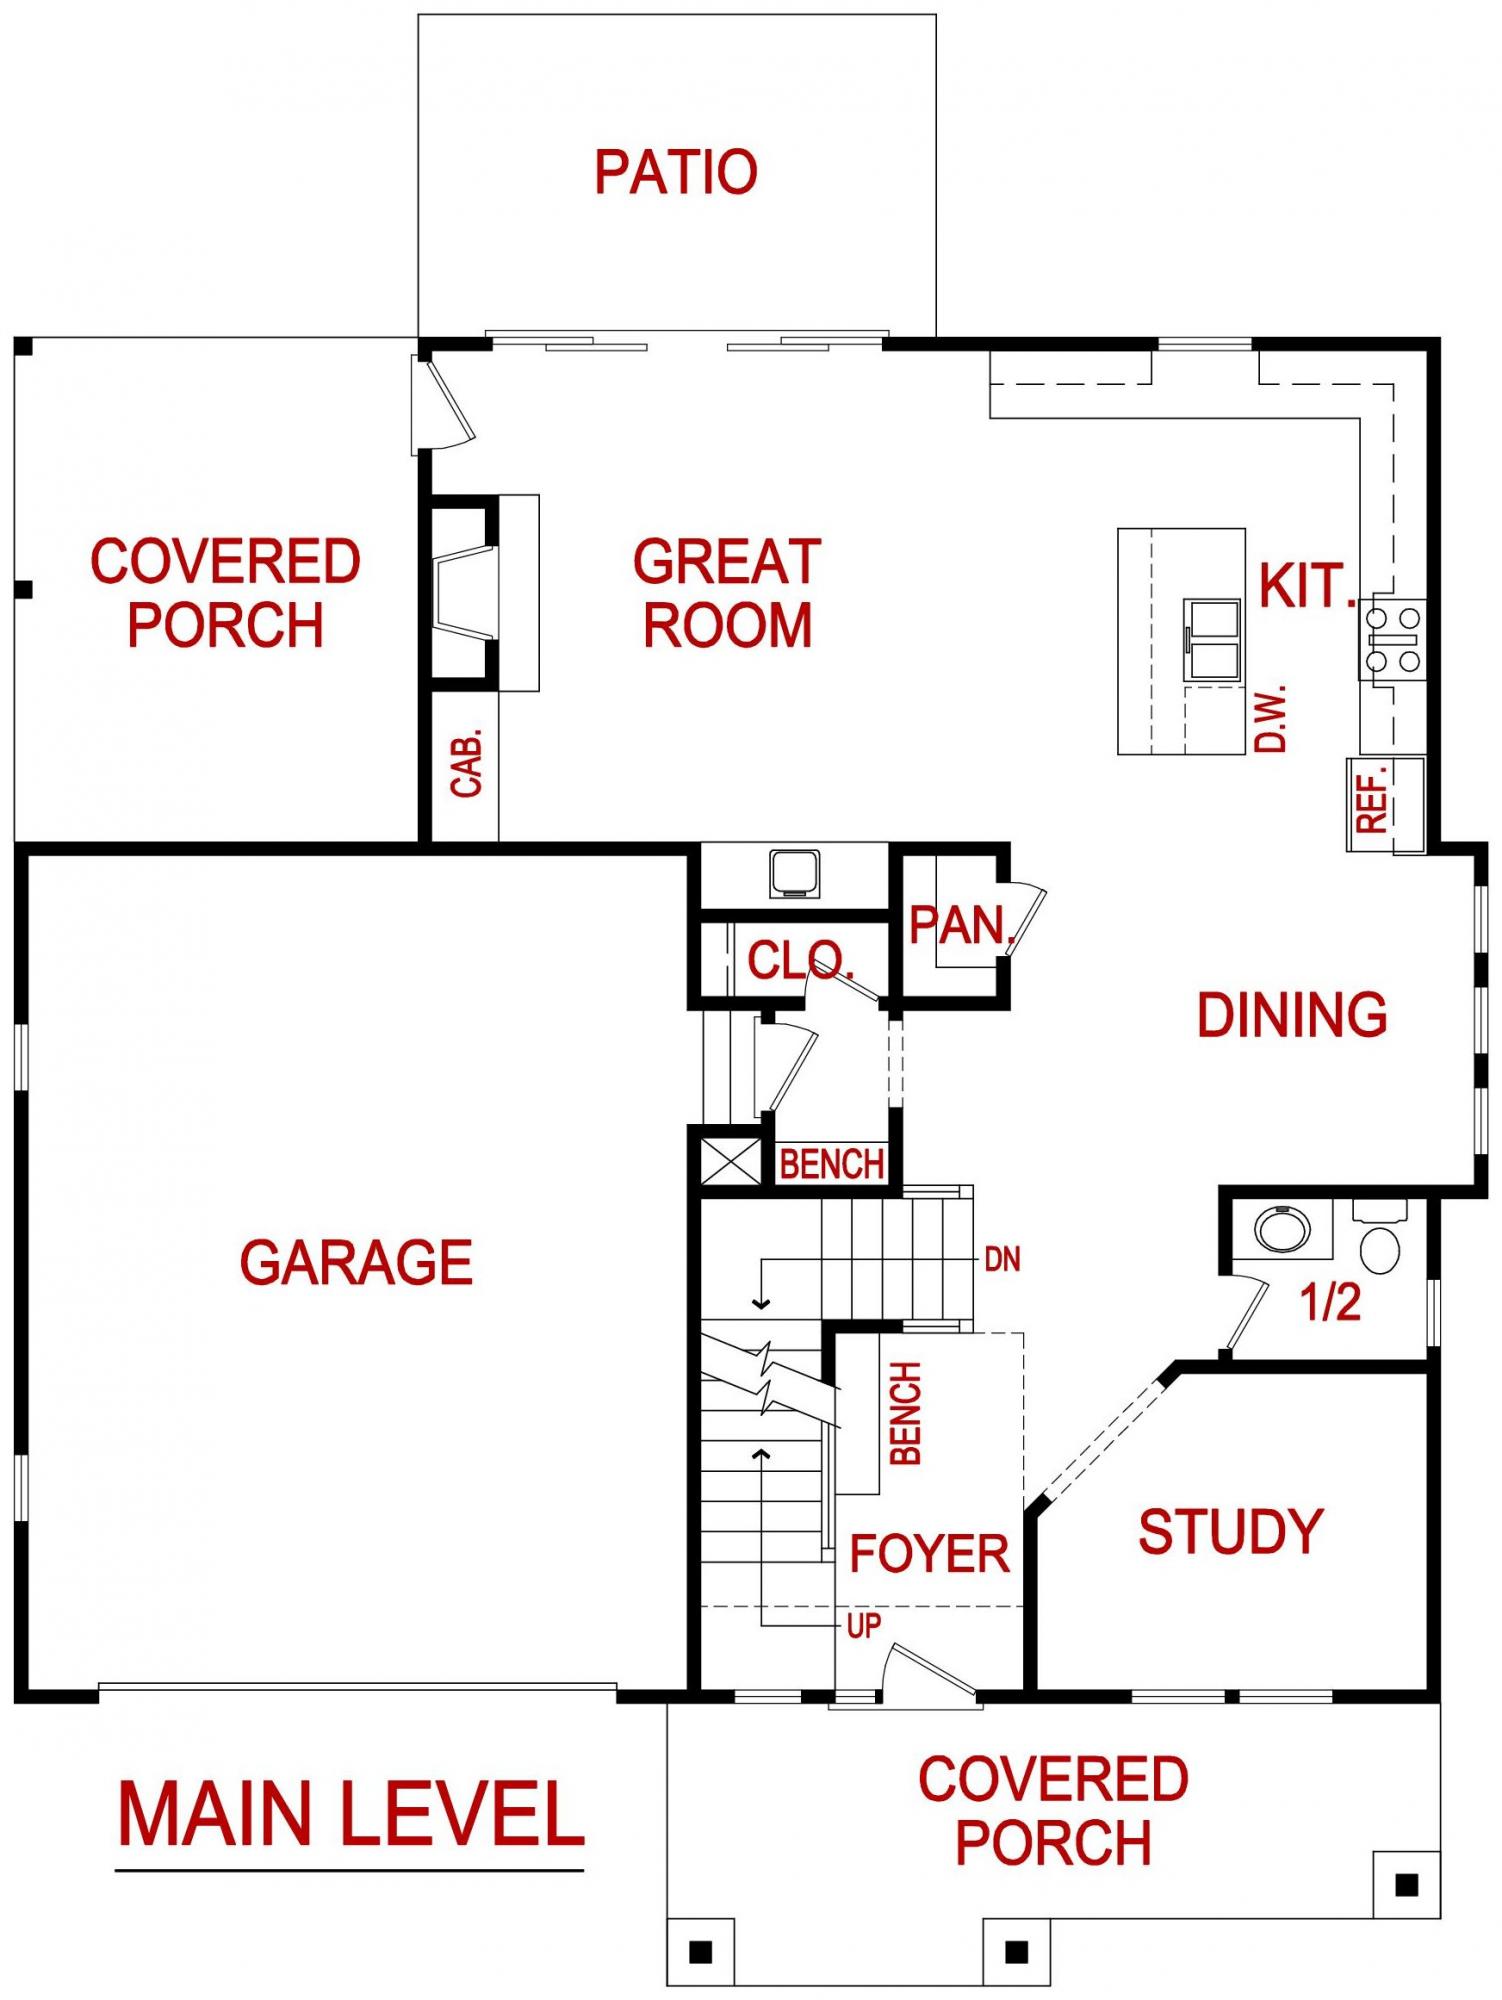 Main level floor plan of 6422 W. 79th Ter. Prairie Village, KS from Lambie custom homes